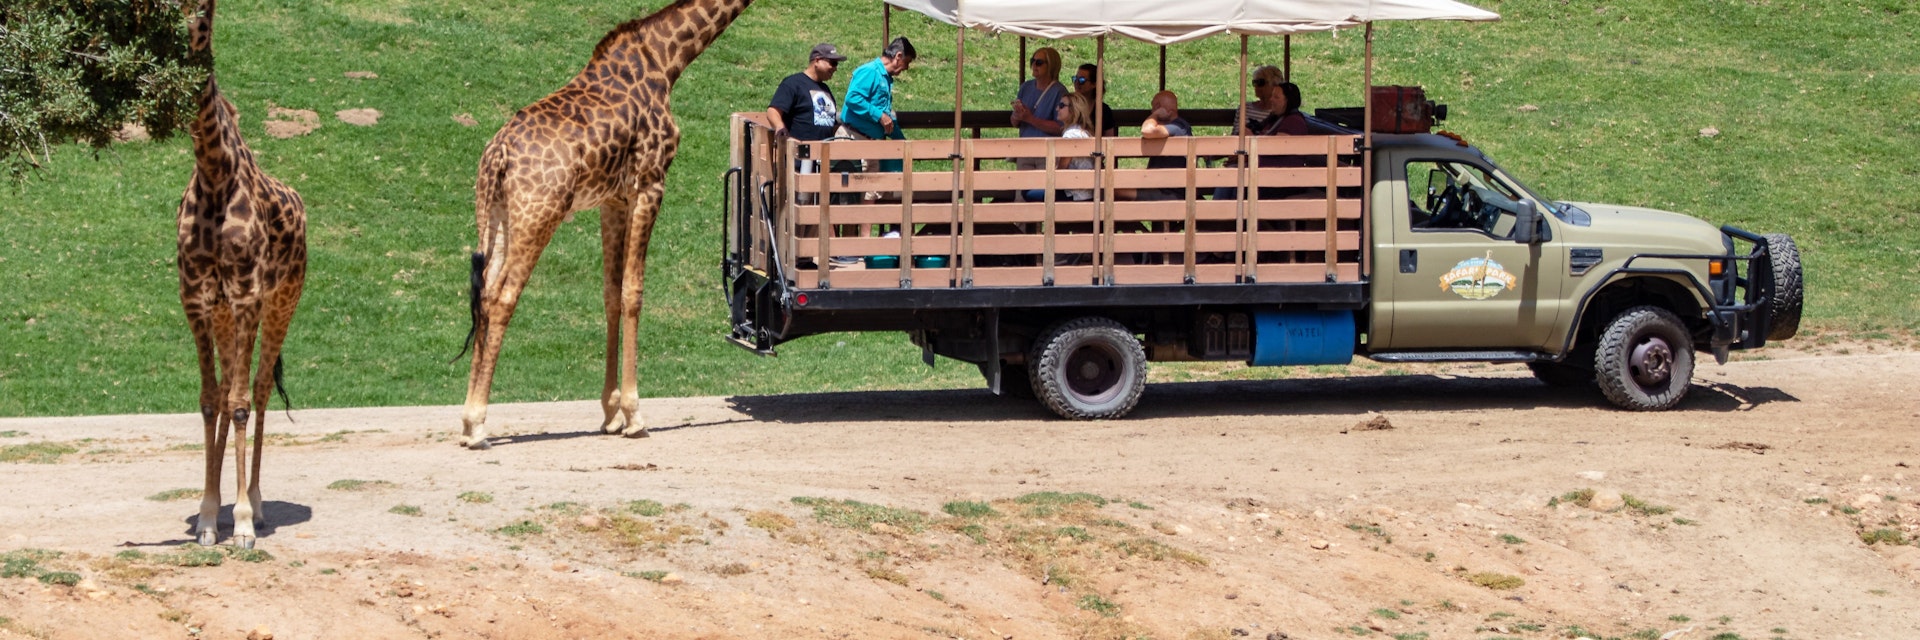 Escondido, CA / USA - 05/05/2019: Giraffes Next to a Safari Truck at the San Diego Zoo Safari Park; Shutterstock ID 1391111201; your: Bridget Brown; gl: 65050; netsuite: Online Editorial; full: POI Image Update